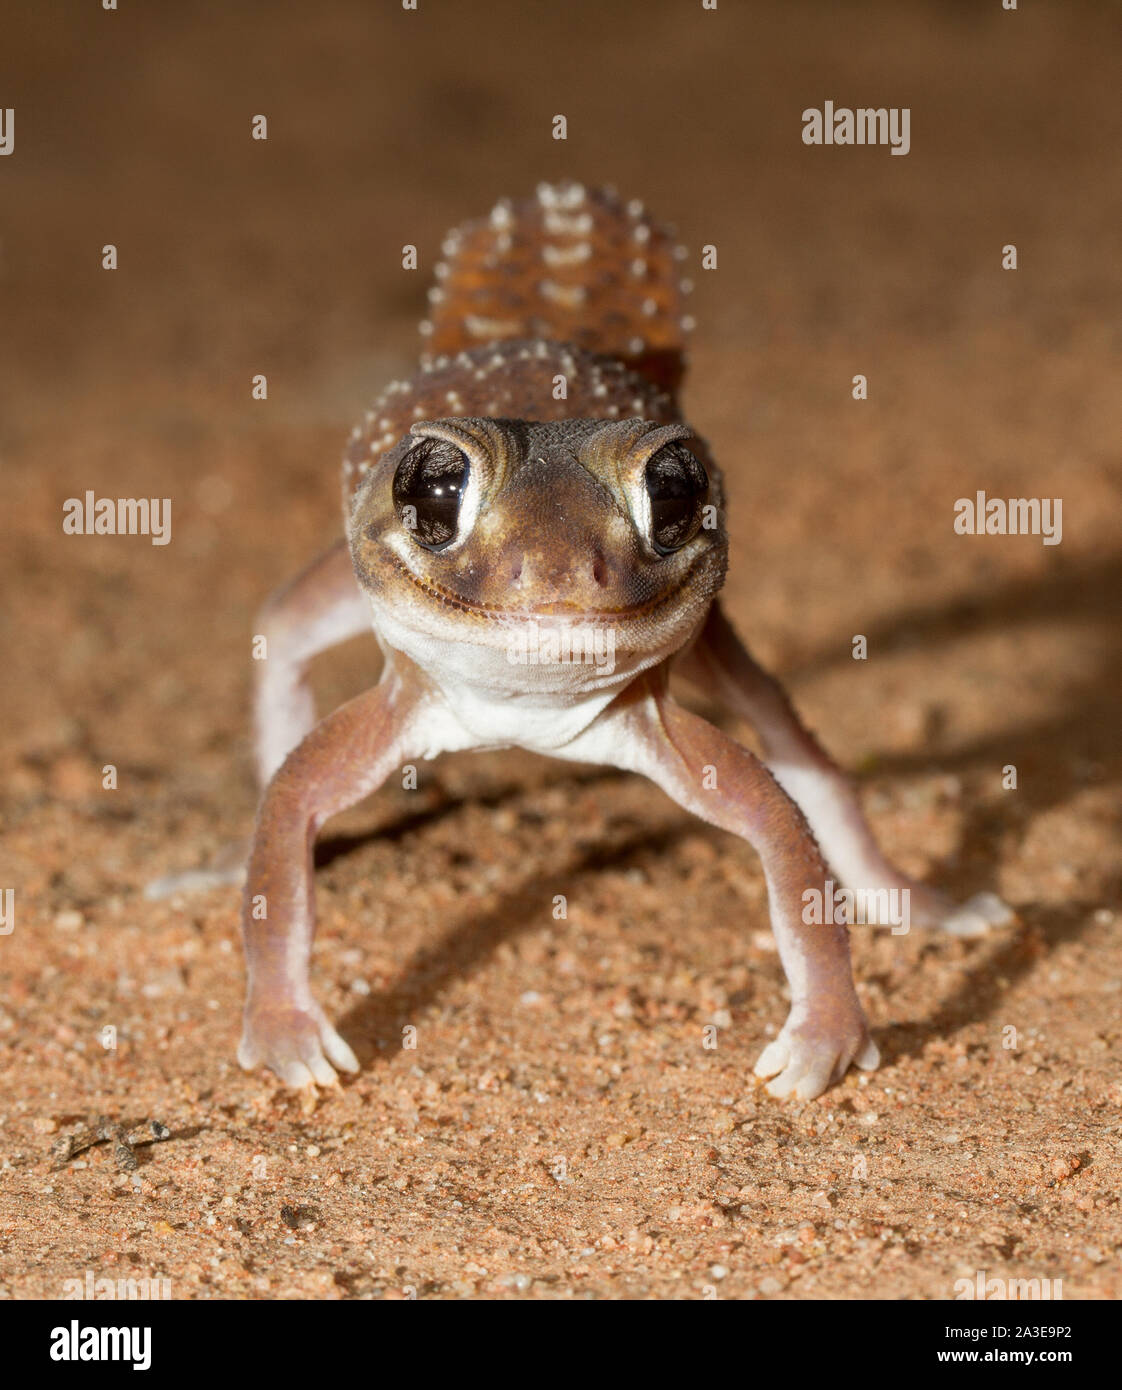 Australian Smooth Knob-tailed Gecko Stock Photo